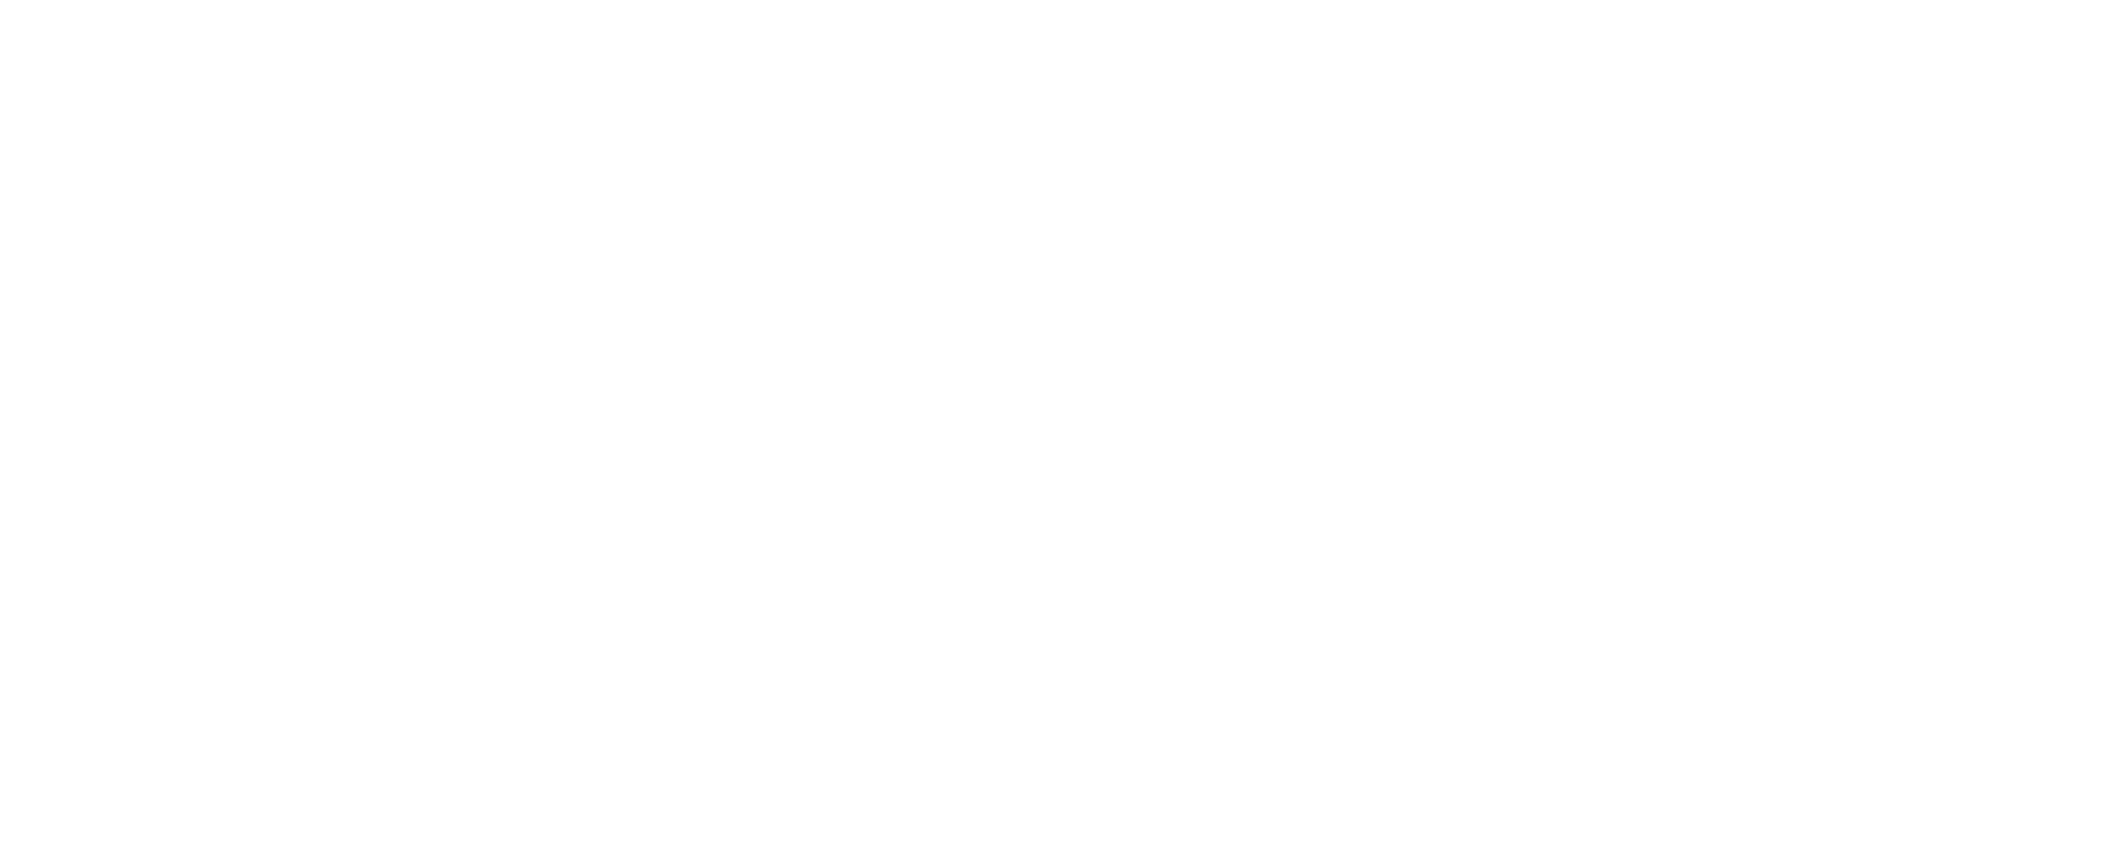 Image of transparent logo of blowfish dining